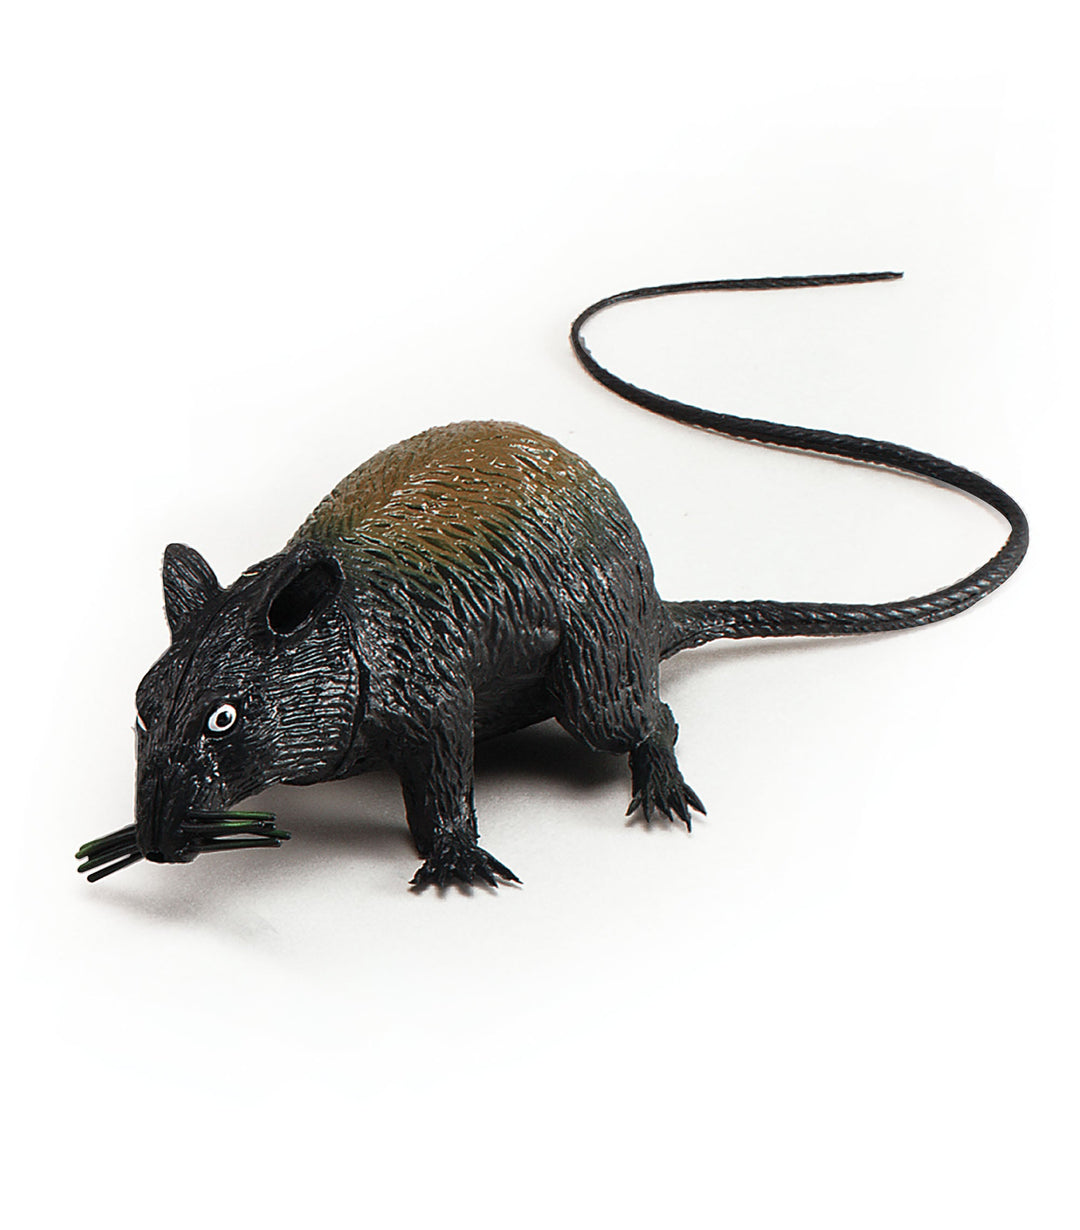 Rat Squeaking Large Toy Animal Rubber Prop_1